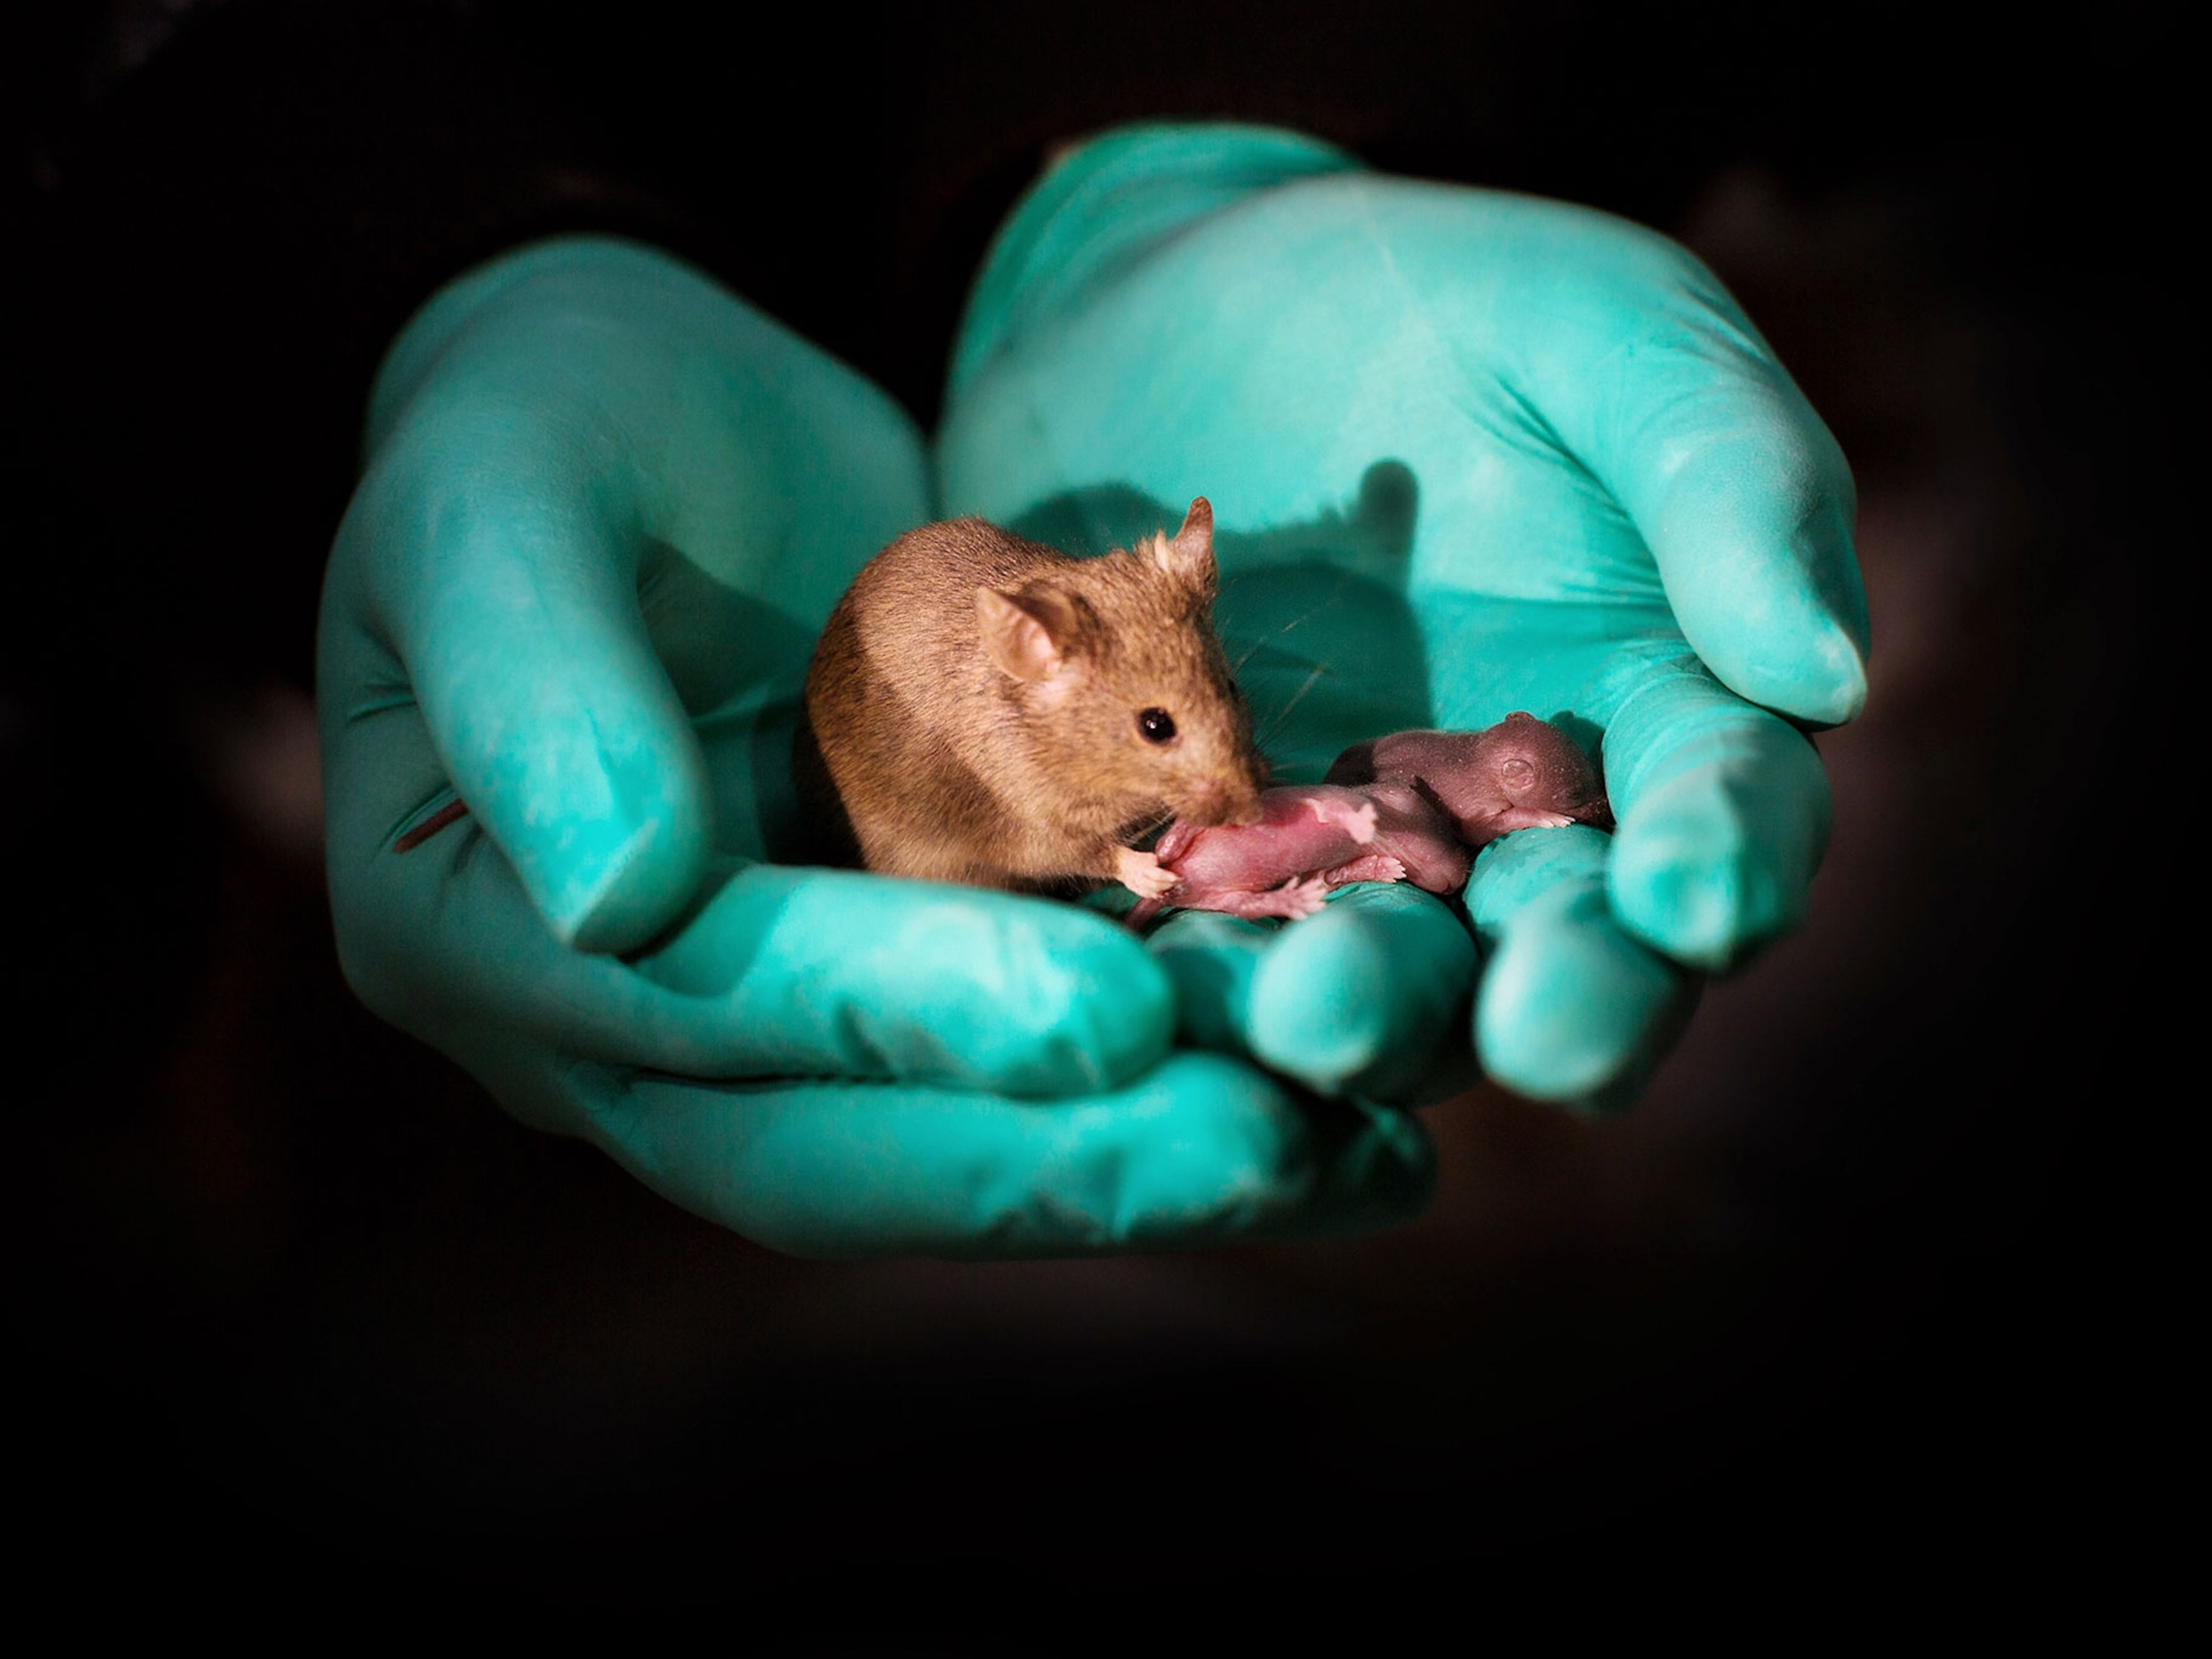 Do male mice make babies?